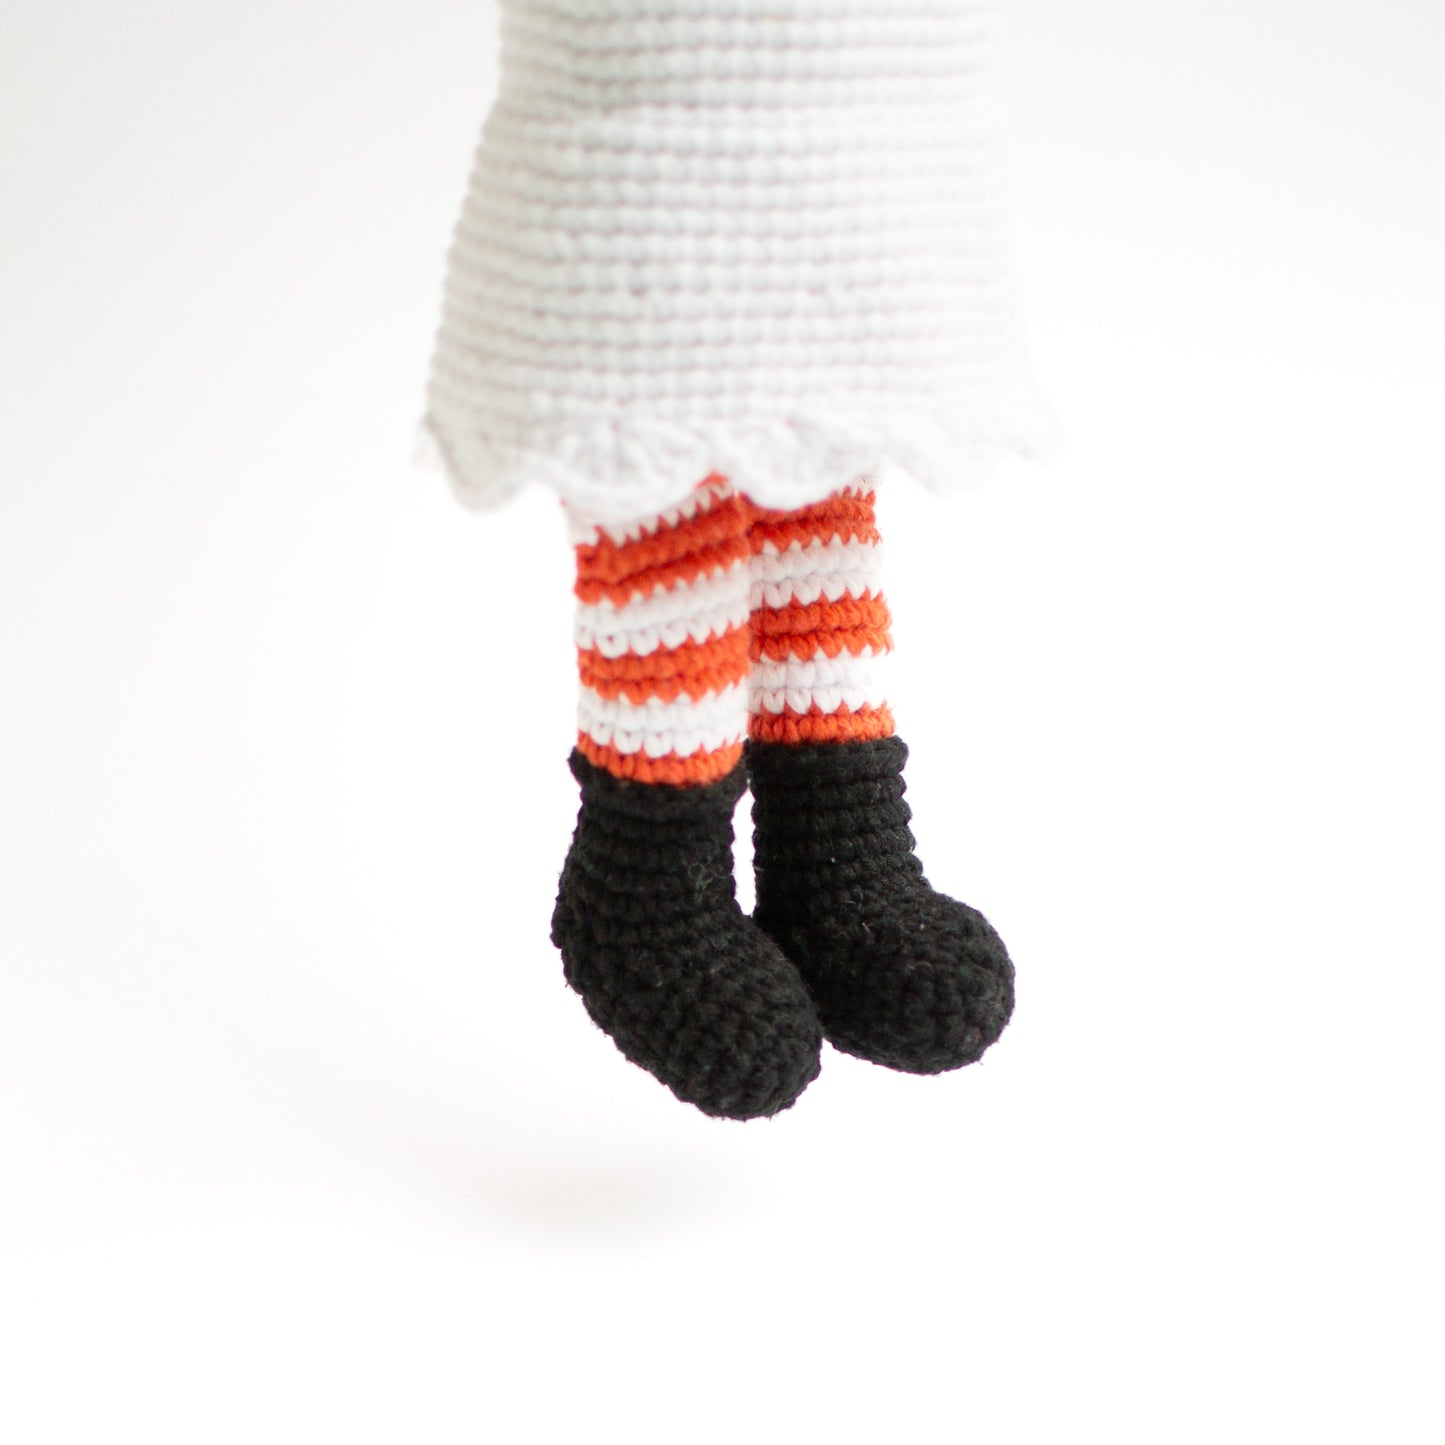 Ghost buddies | Crochet amigurumi PDF pattern